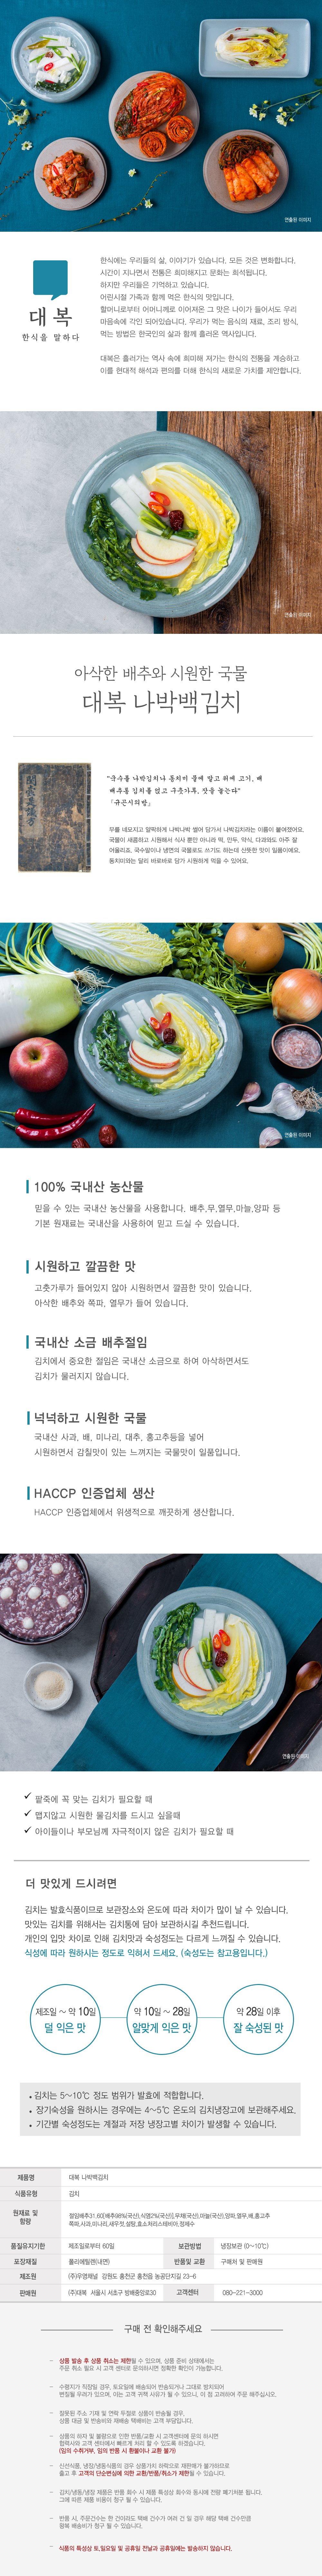 kimchi(nab)h_db.jpg